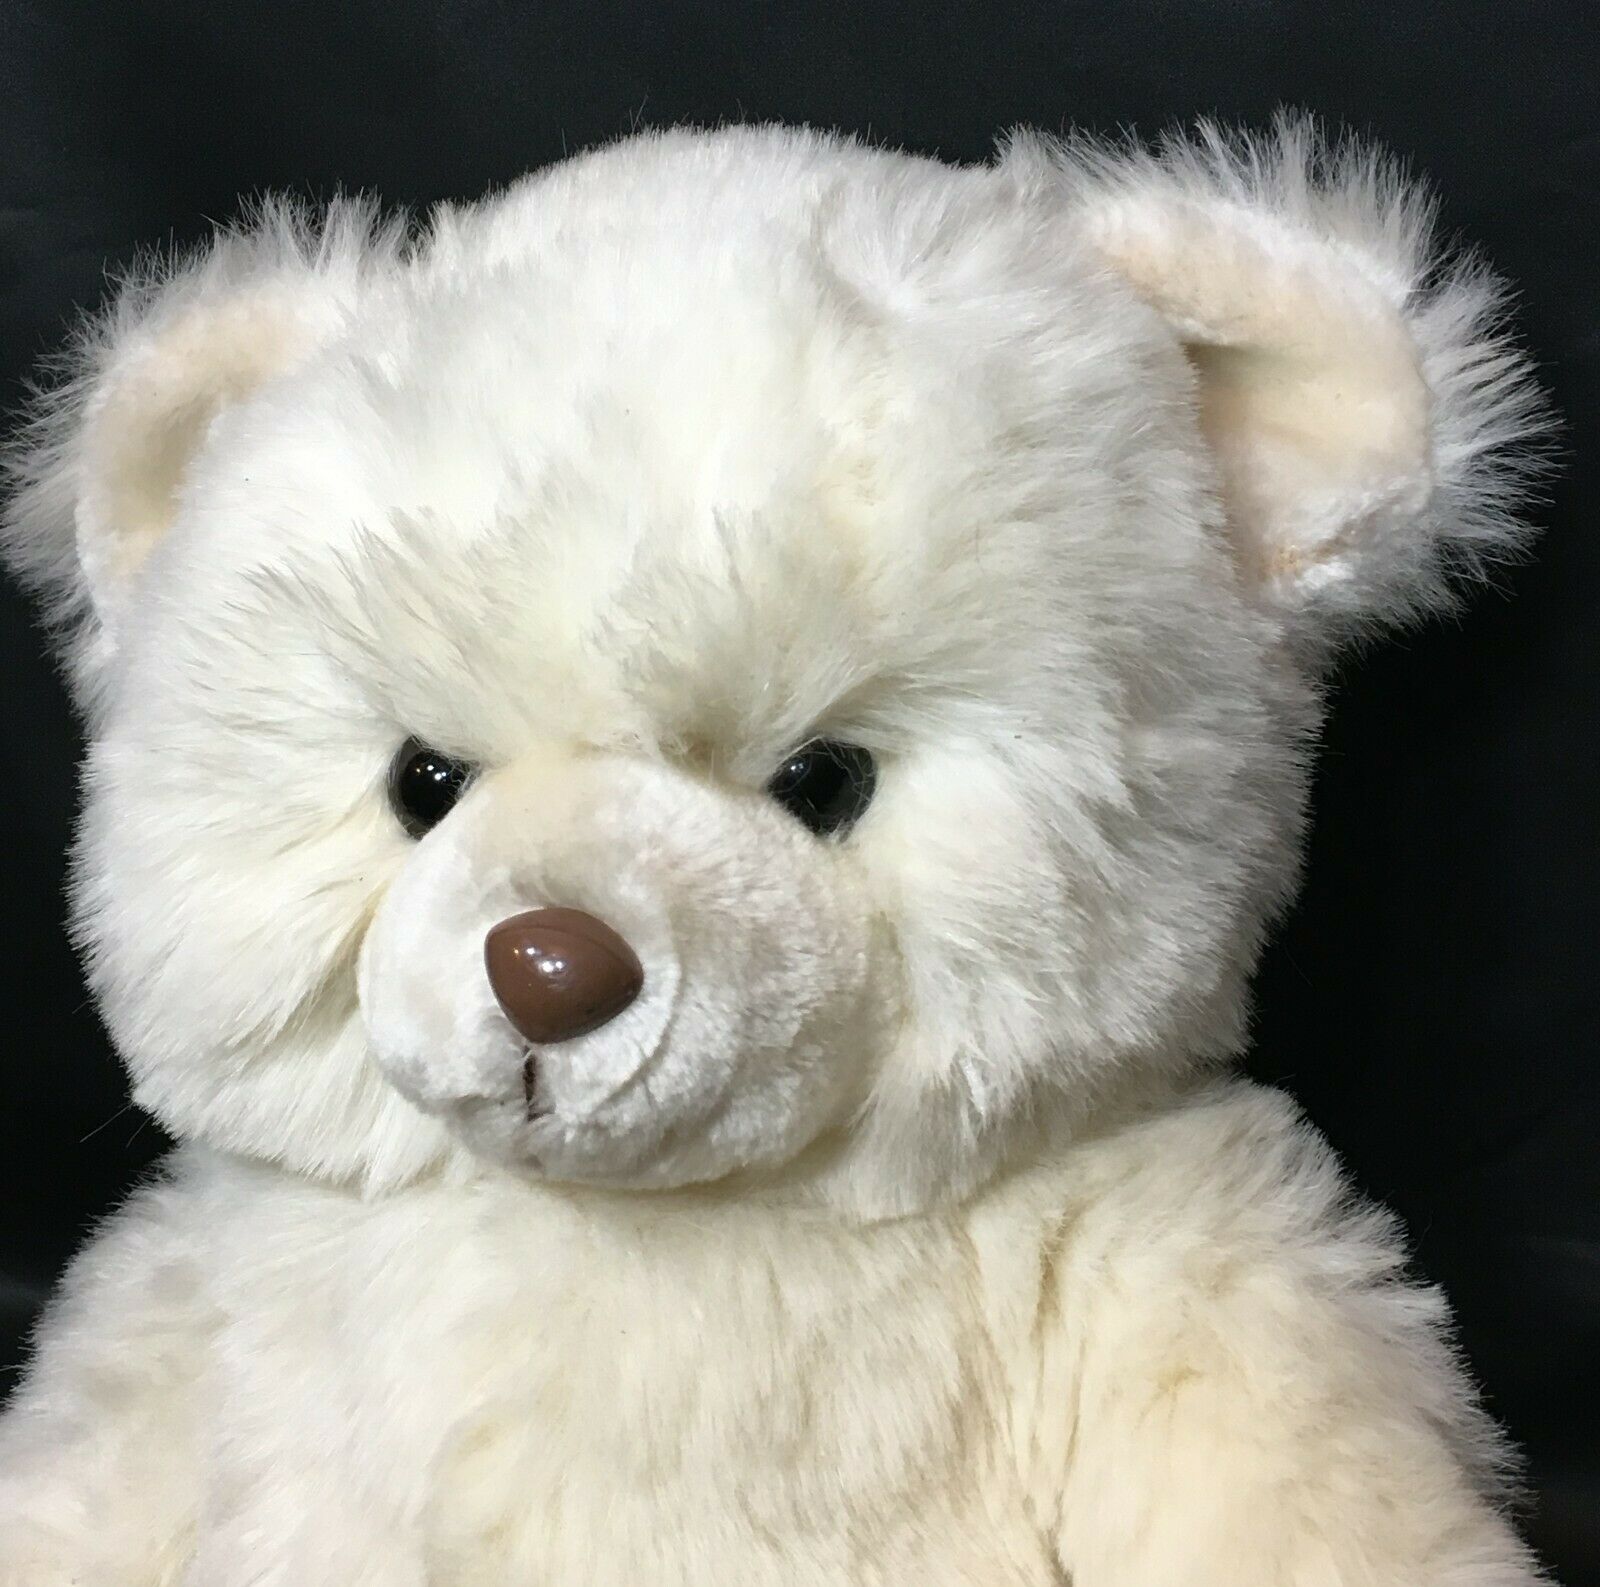 America Wego Teddy Bear Plush Vintage 1982 White Fluffy Stuffed Animal Toy 16"